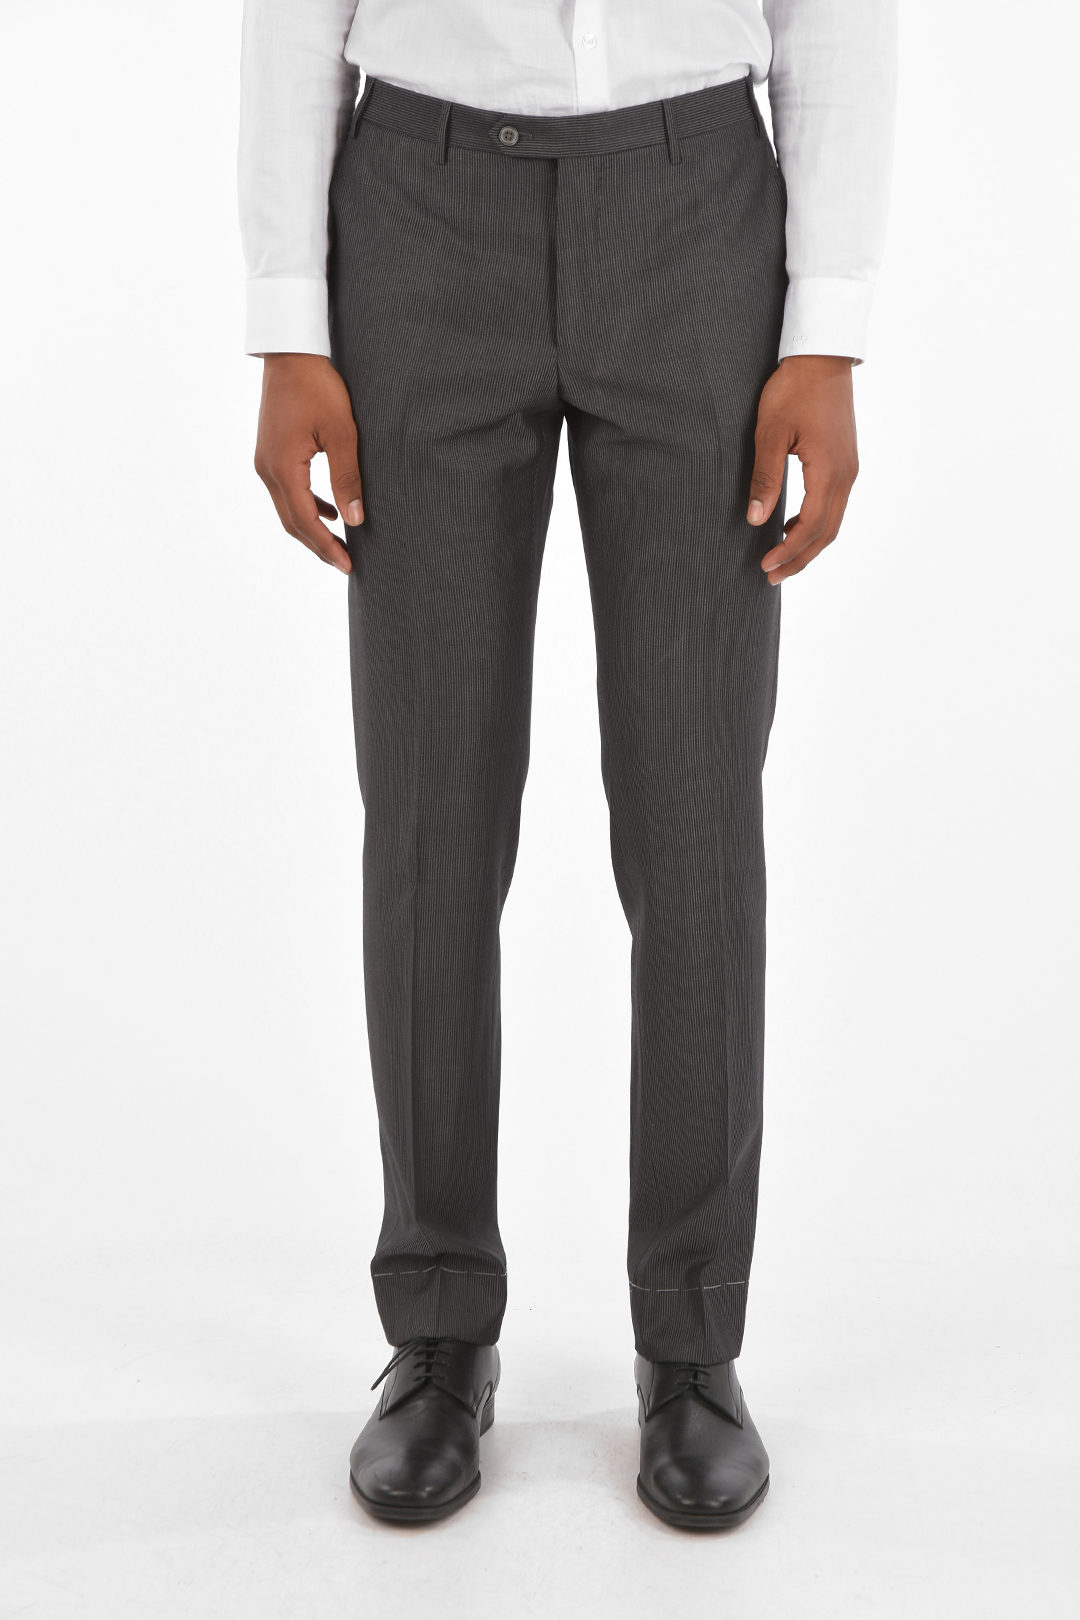 Corneliani 3-Piece CERIM.ACADEMY Pinstriped Pants Suit men - Glamood Outlet